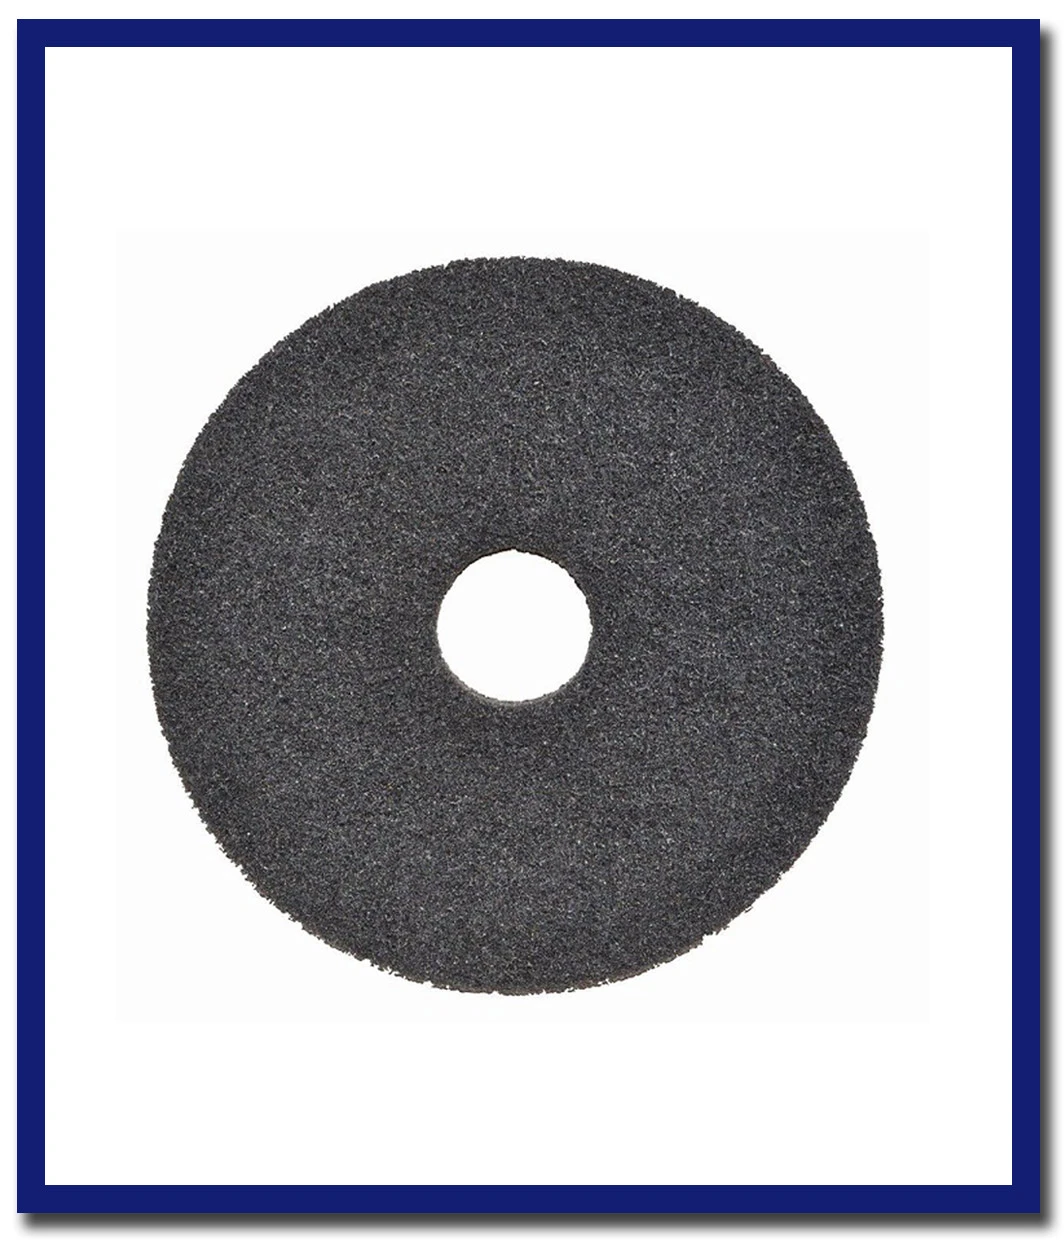 Edco Premium Floor Pads Black - 1 Pc - Stone Doctor Australia - Cleaning Accessories > Floor Pads > Cleaning